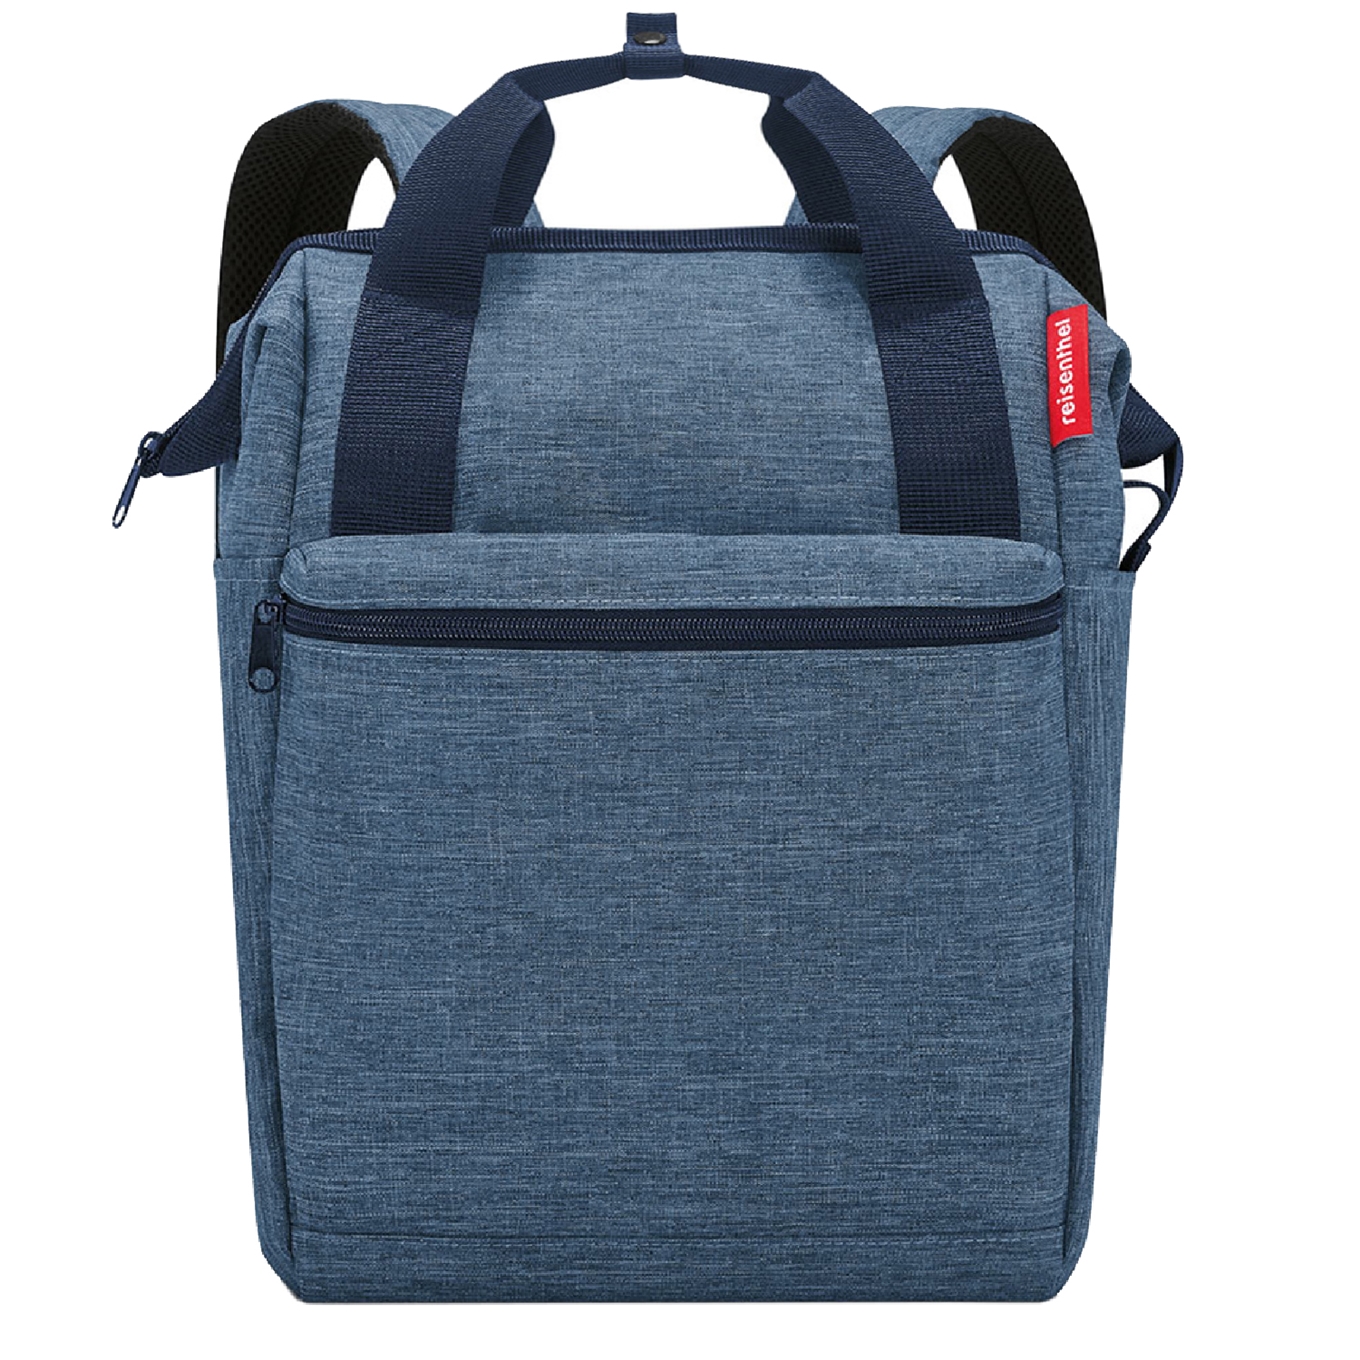 Reisenthel Travelling Allrounder R twist blue backpack